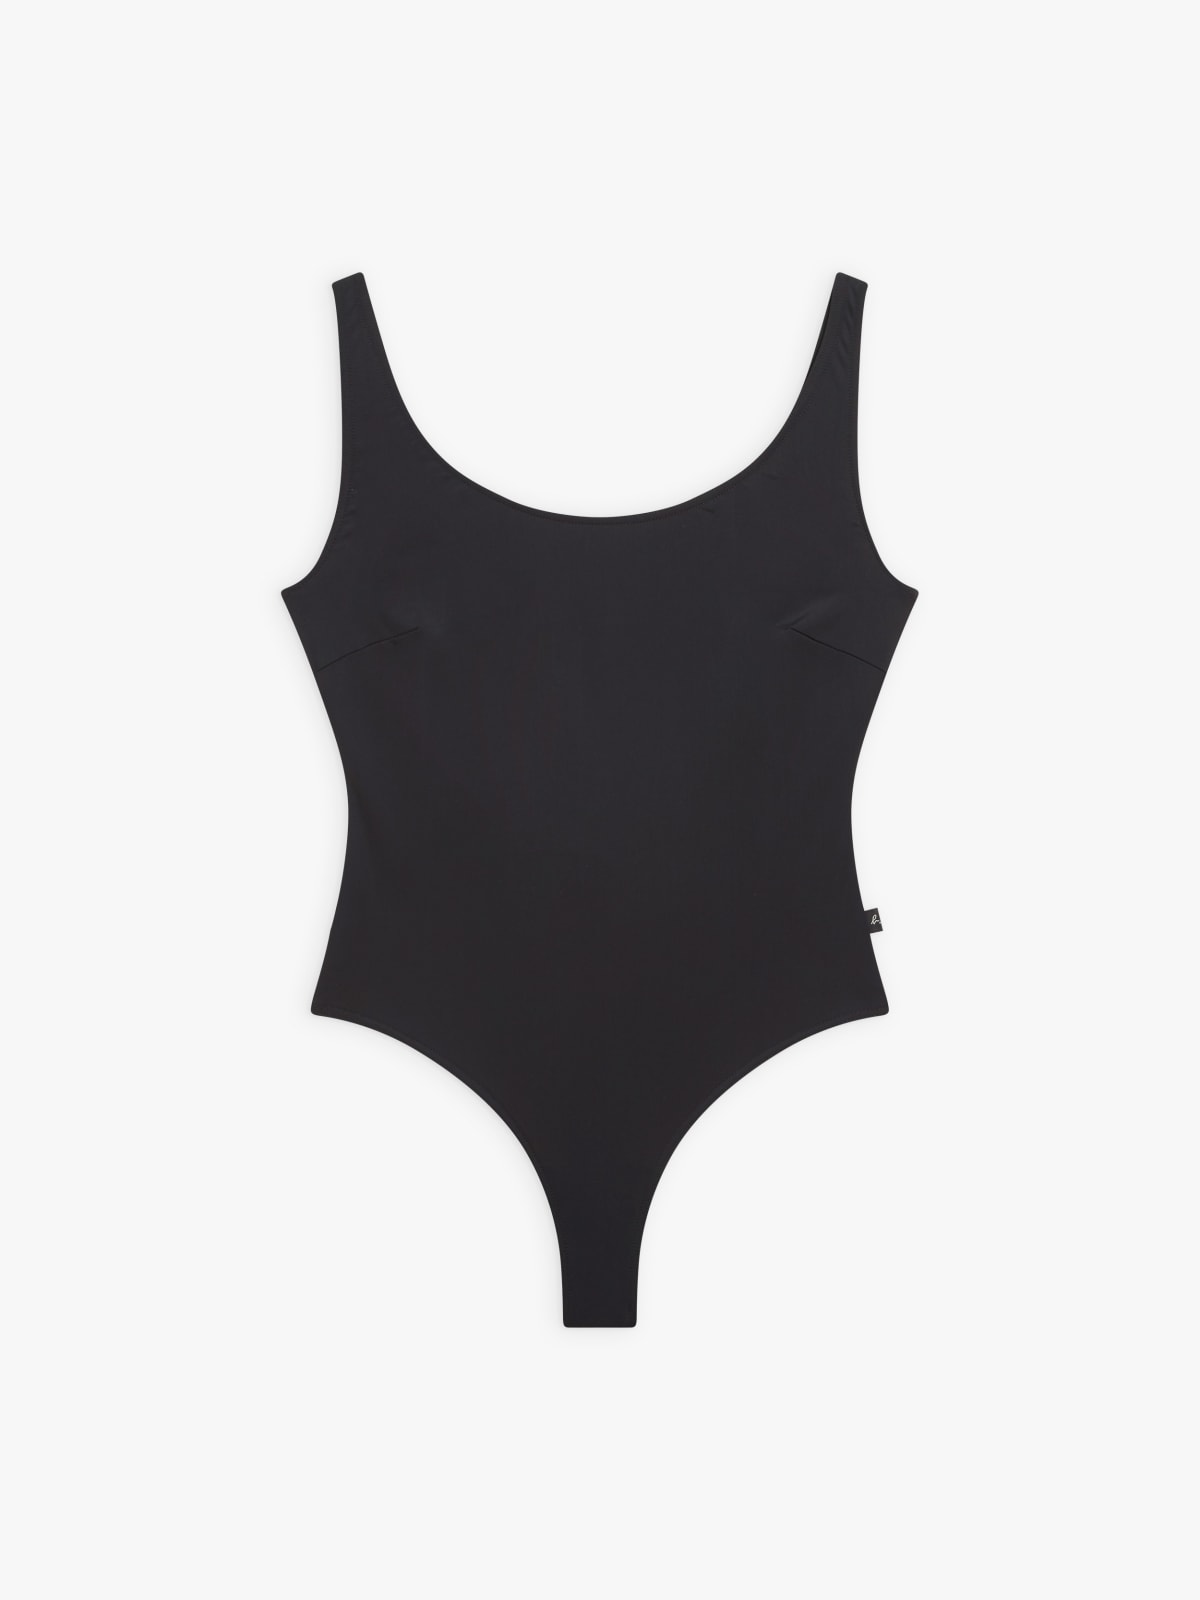 black one-piece Sydney swimsuit